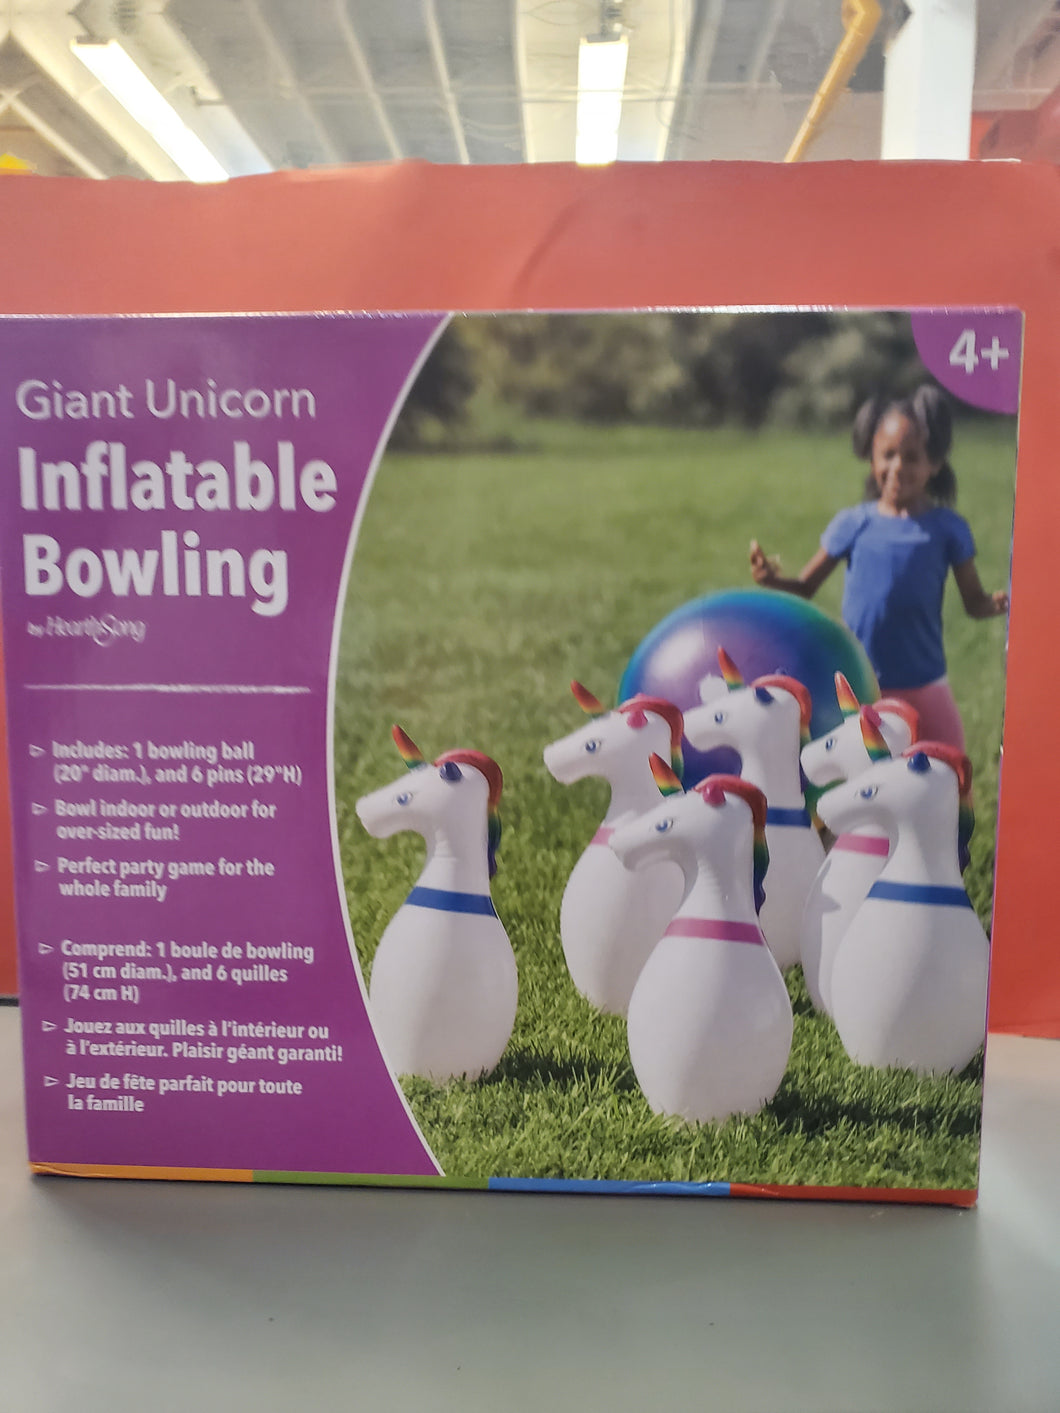 Giant Unicorn inflatable bowling